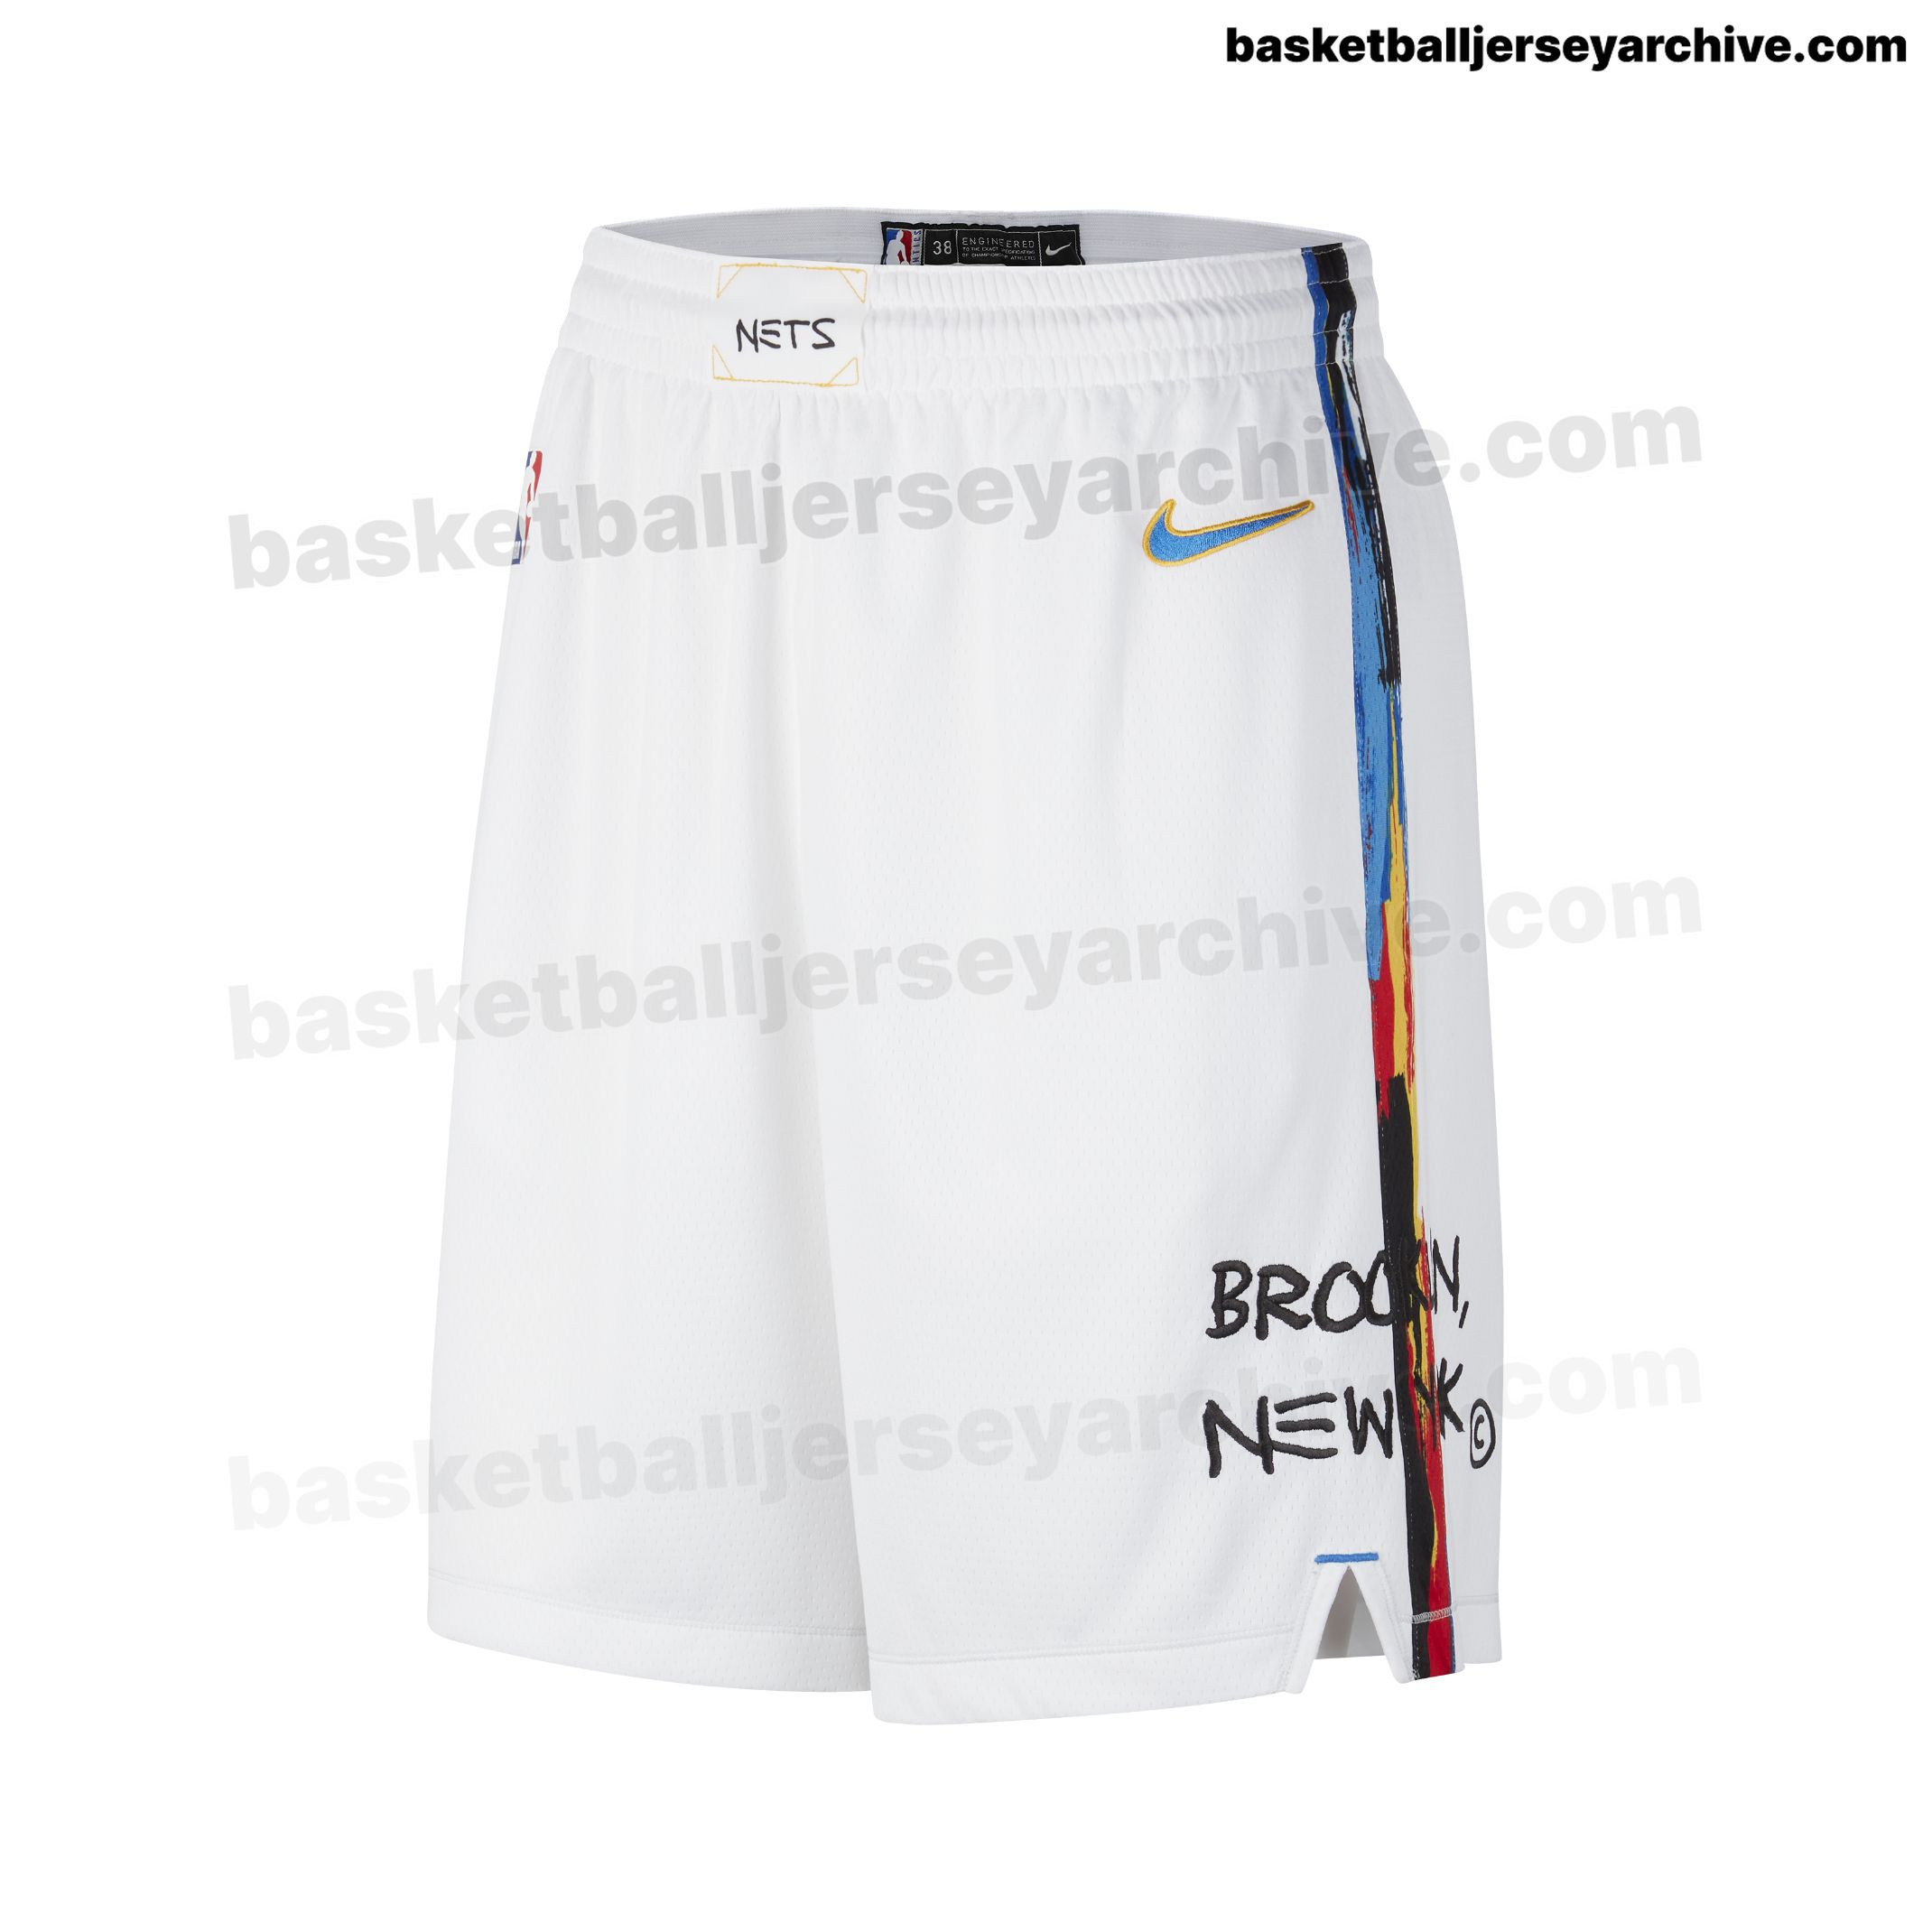 Nets' 2022 City Edition design (white Basquiat jerseys) : r/GoNets